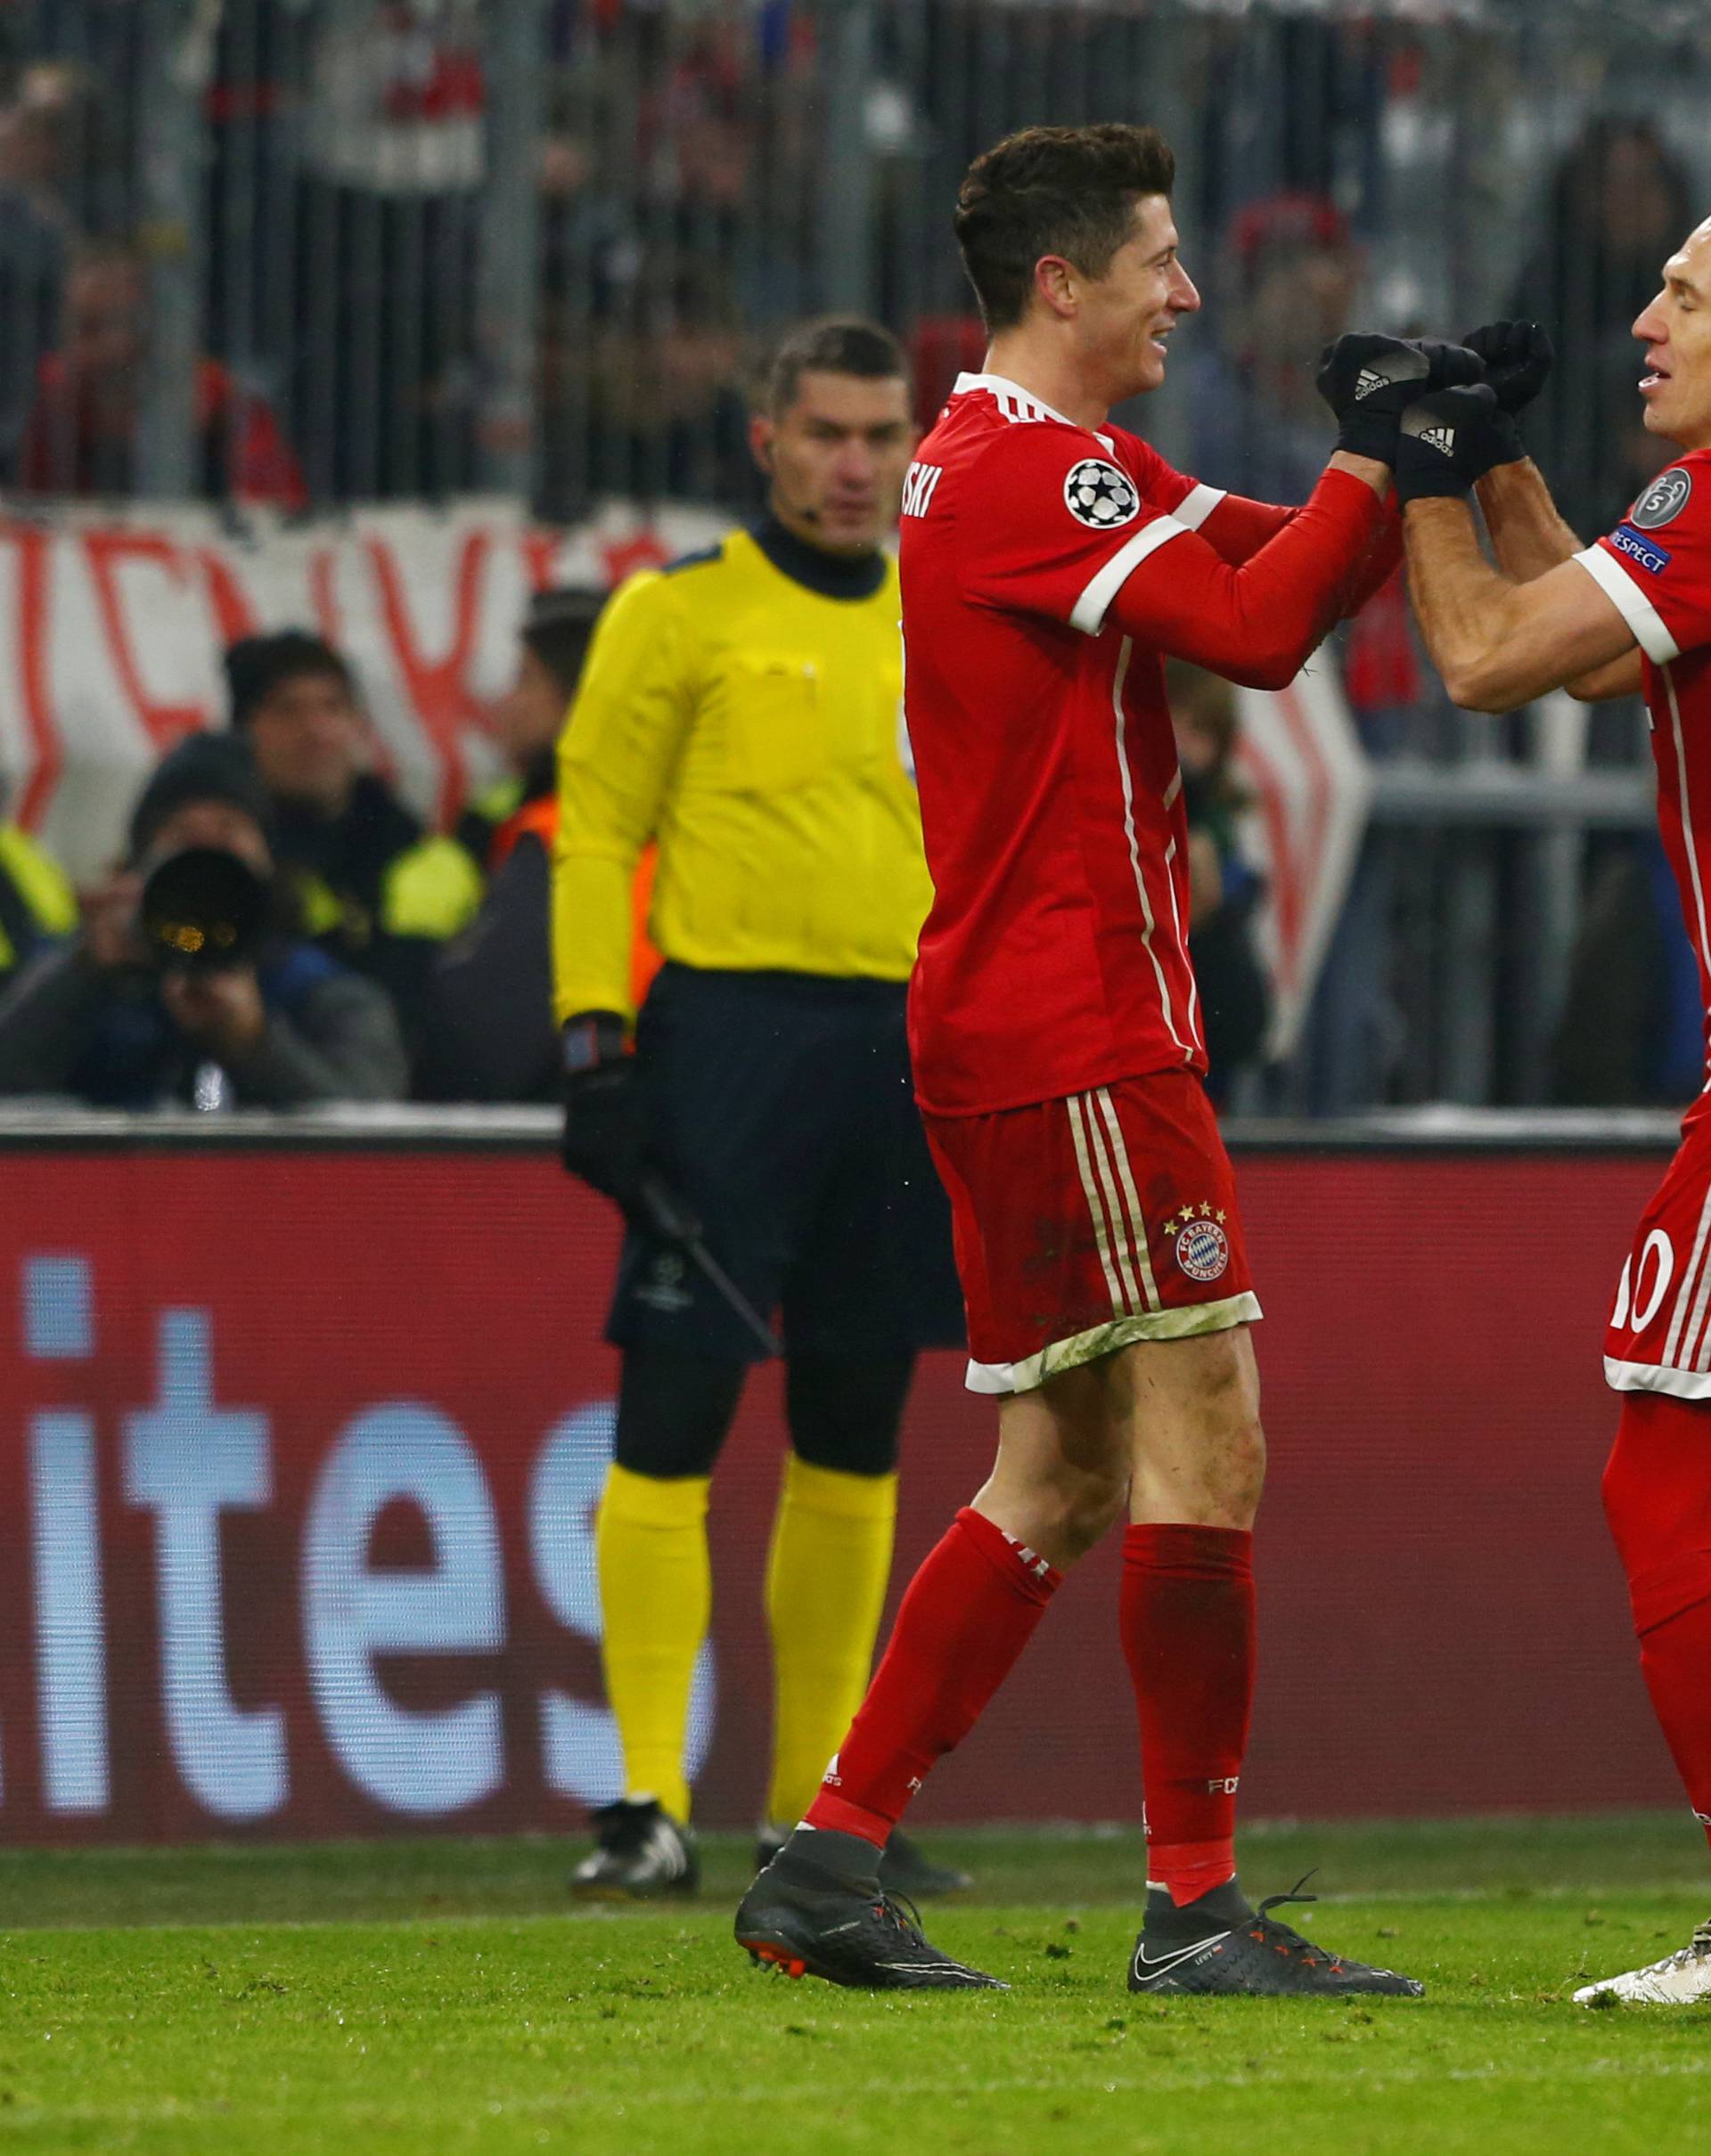 Champions League Round of 16 First Leg - Bayern Munich vs Besiktas